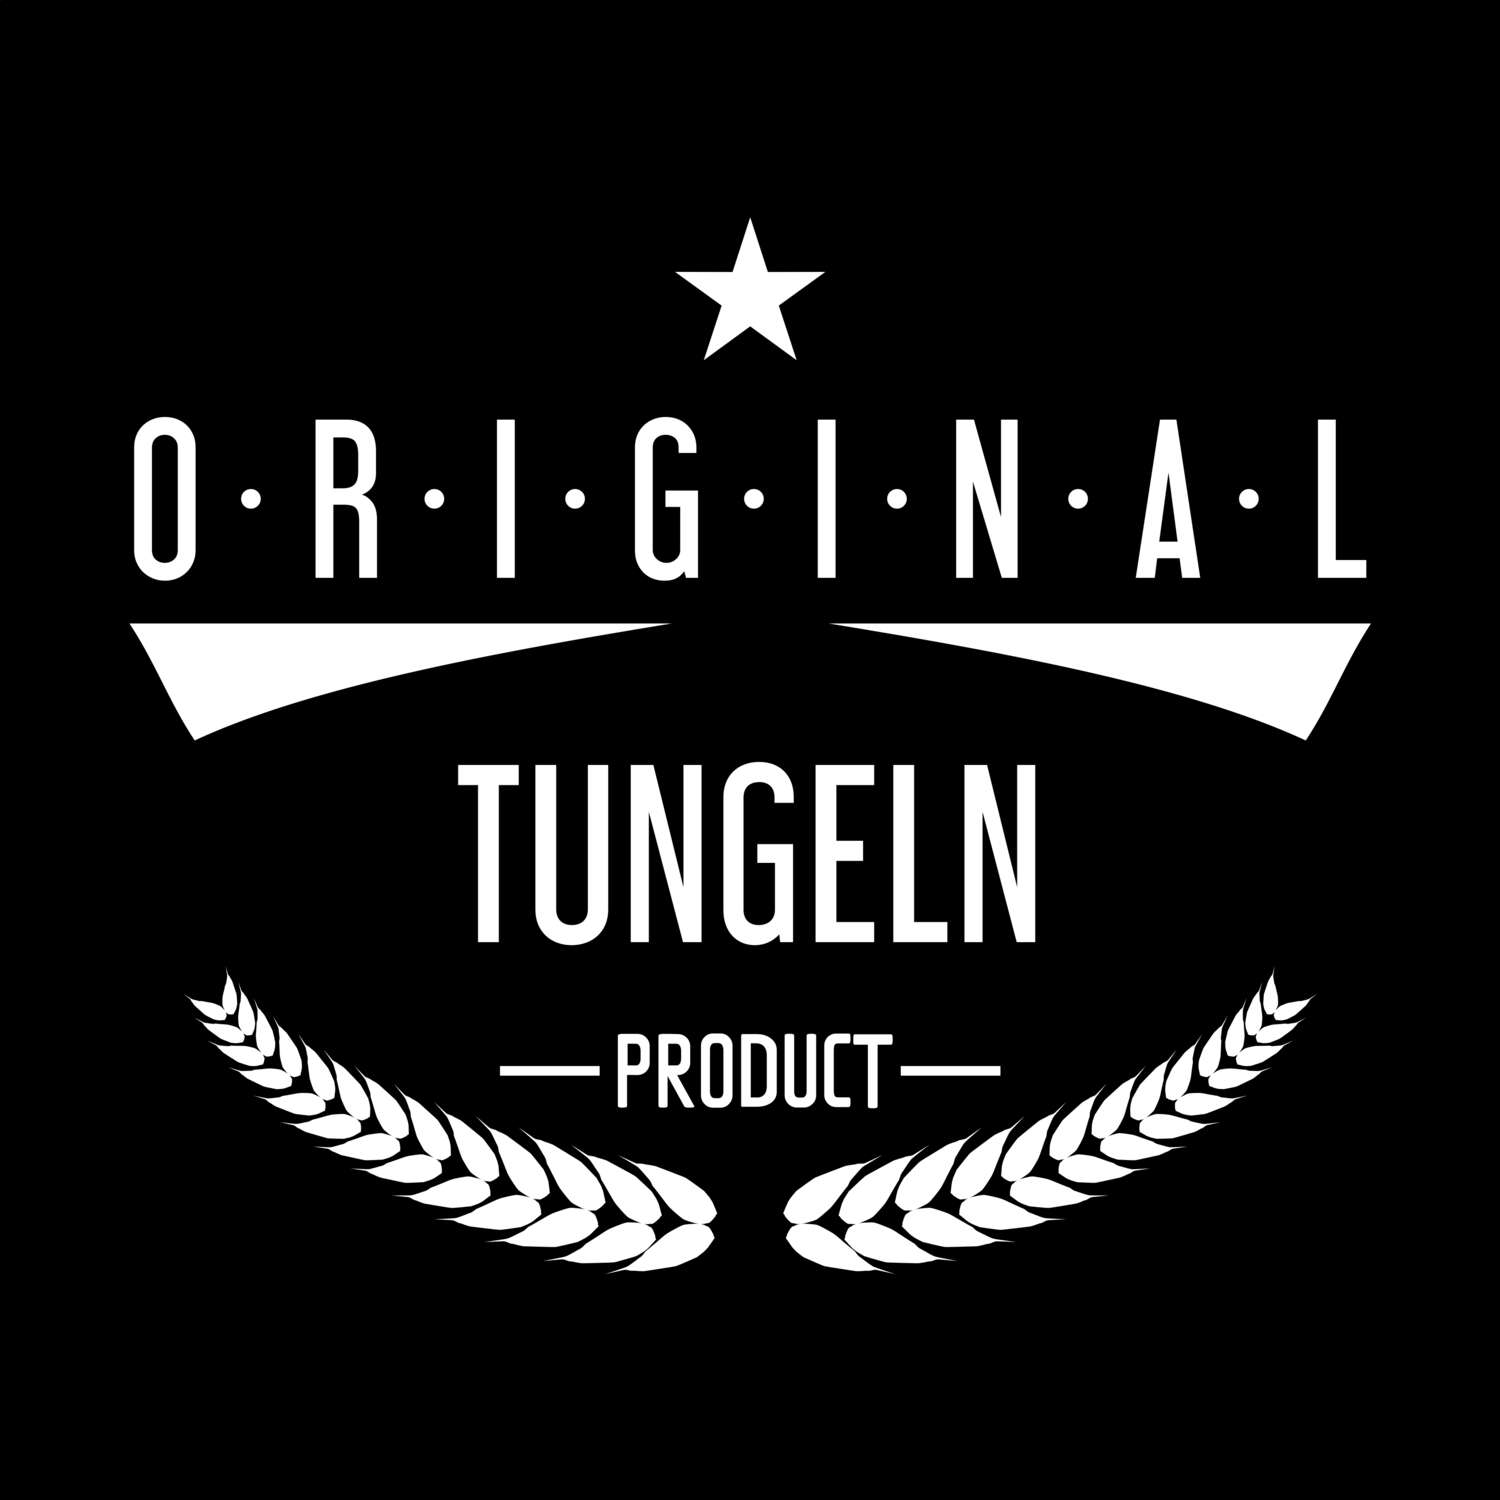 Tungeln T-Shirt »Original Product«